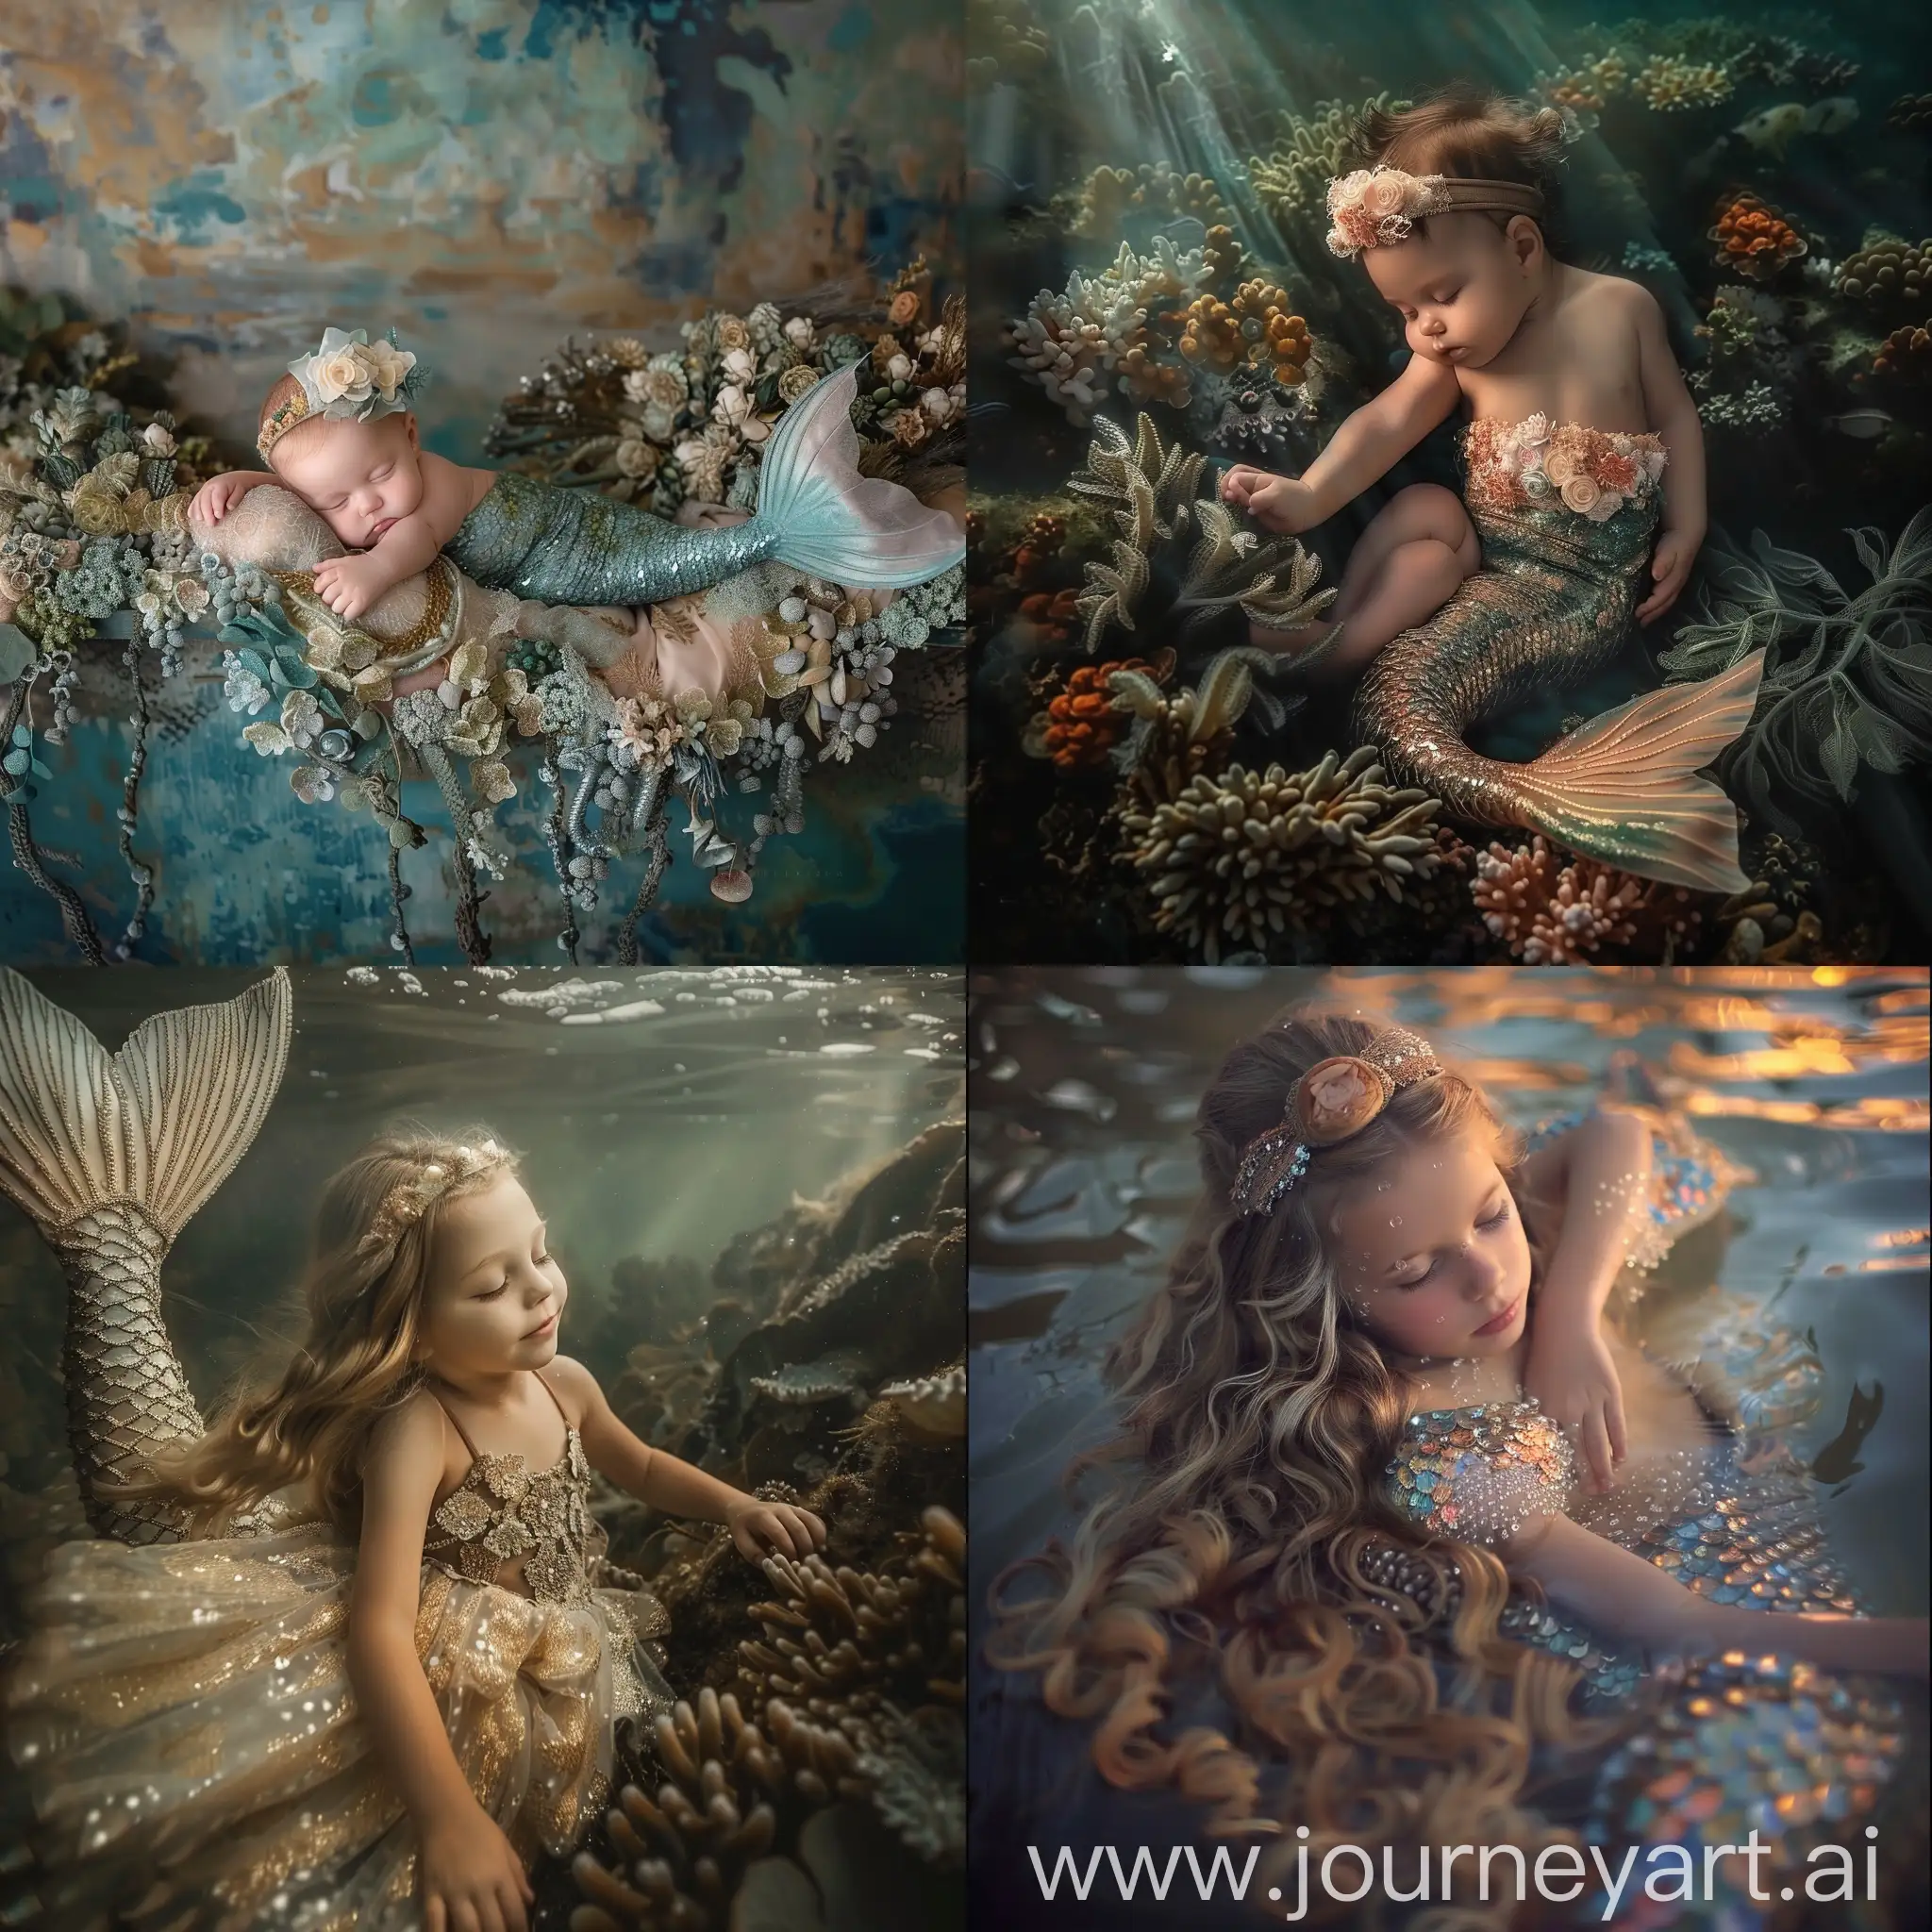 Children's Photography, Portrait Photography, Newborns, Mermaids, Dream Scenes